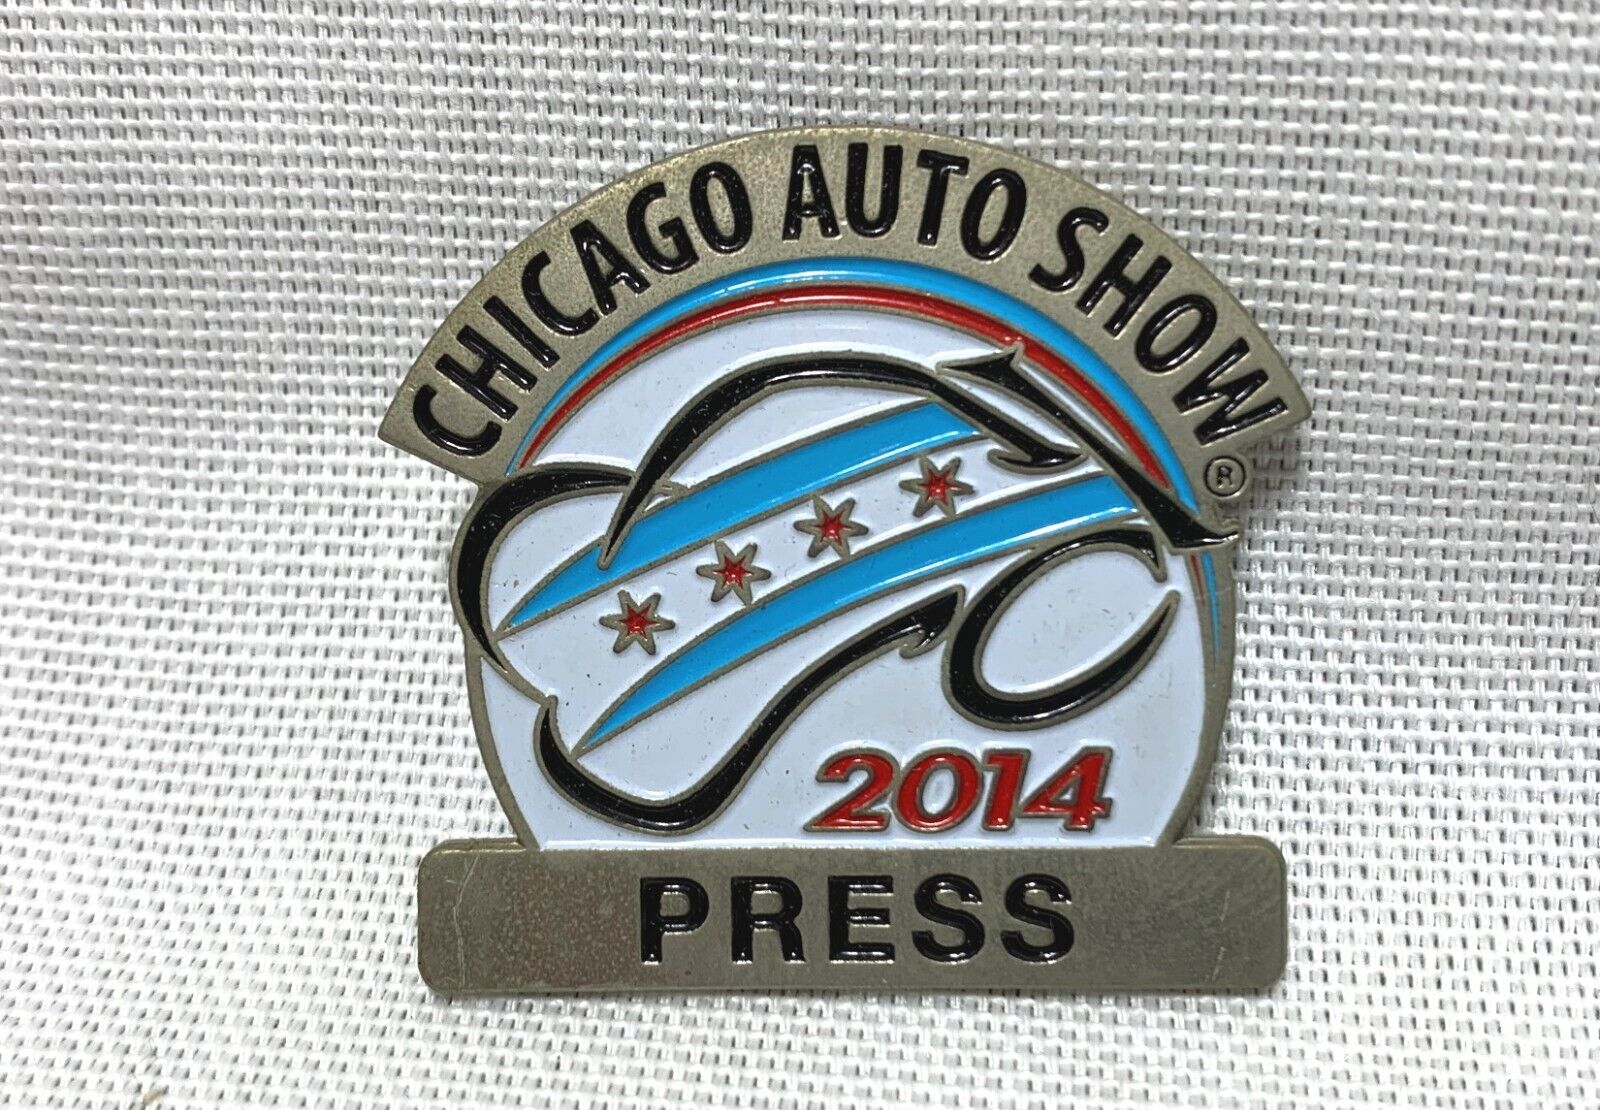 Vintage Chicago Auto Show 2014 Press Enamel Pin Button Automobilia Collectible